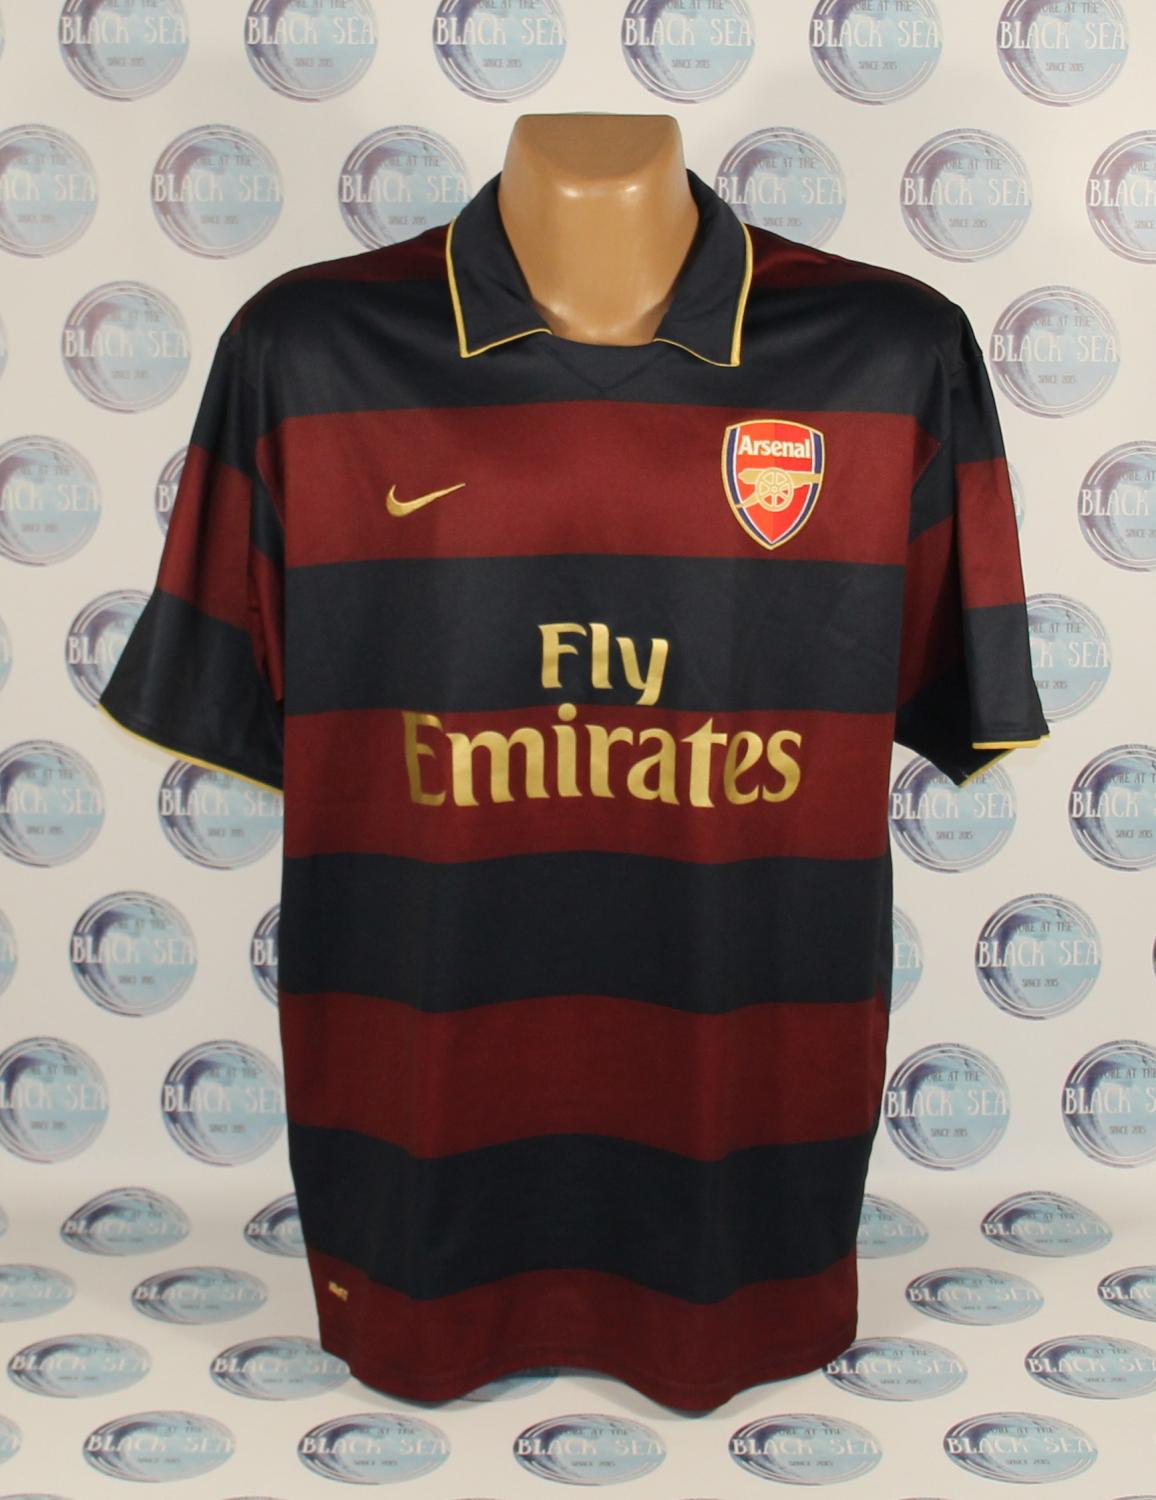 Arsenal Third football shirt 2007 - 2008. Sponsored by Emirates